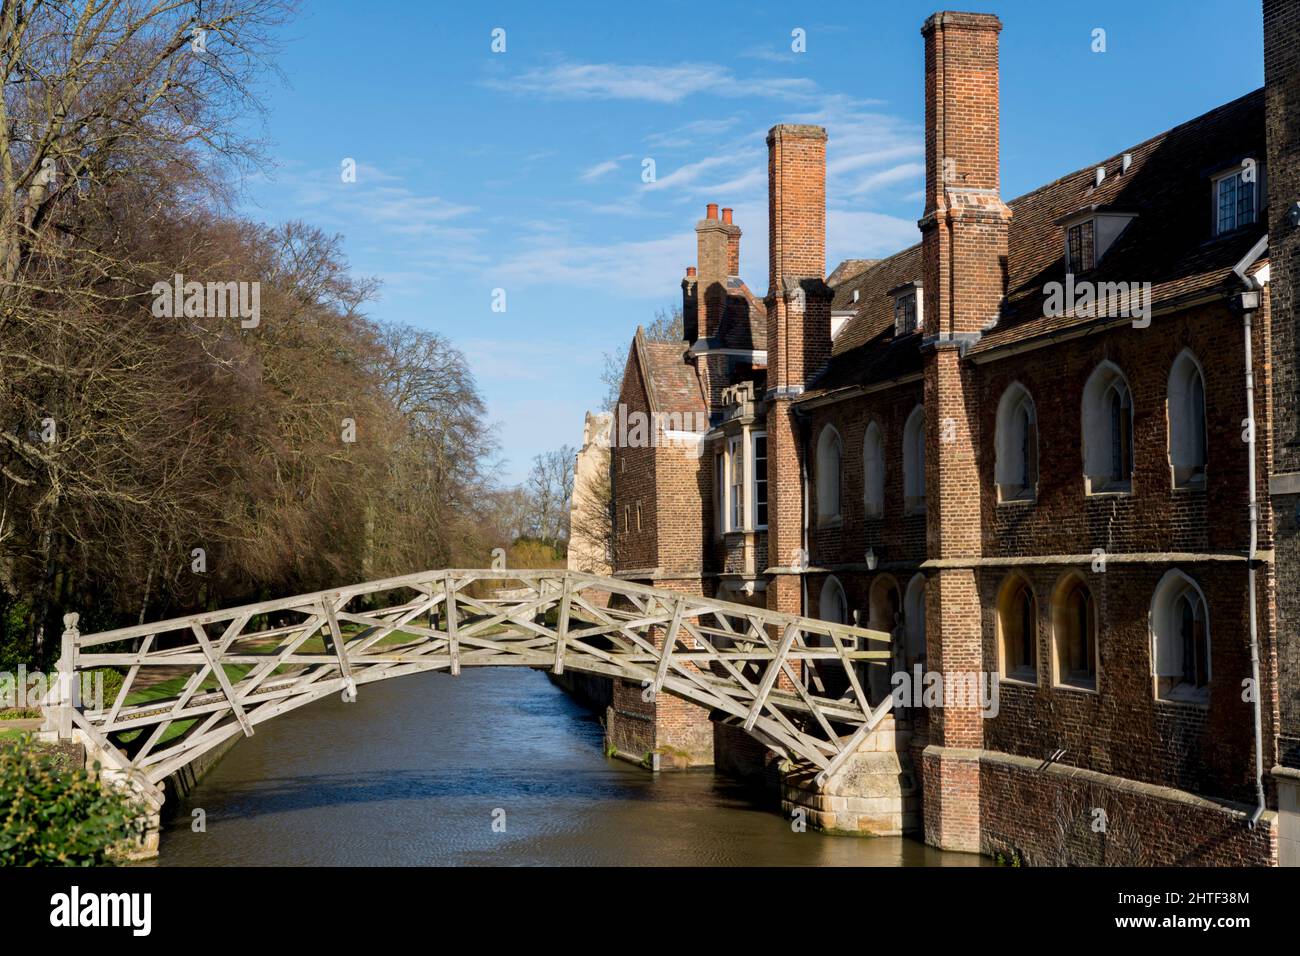 Europe, UK, England, Cambridgeshire, Cambridge, Mathematician's bridge Stock Photo